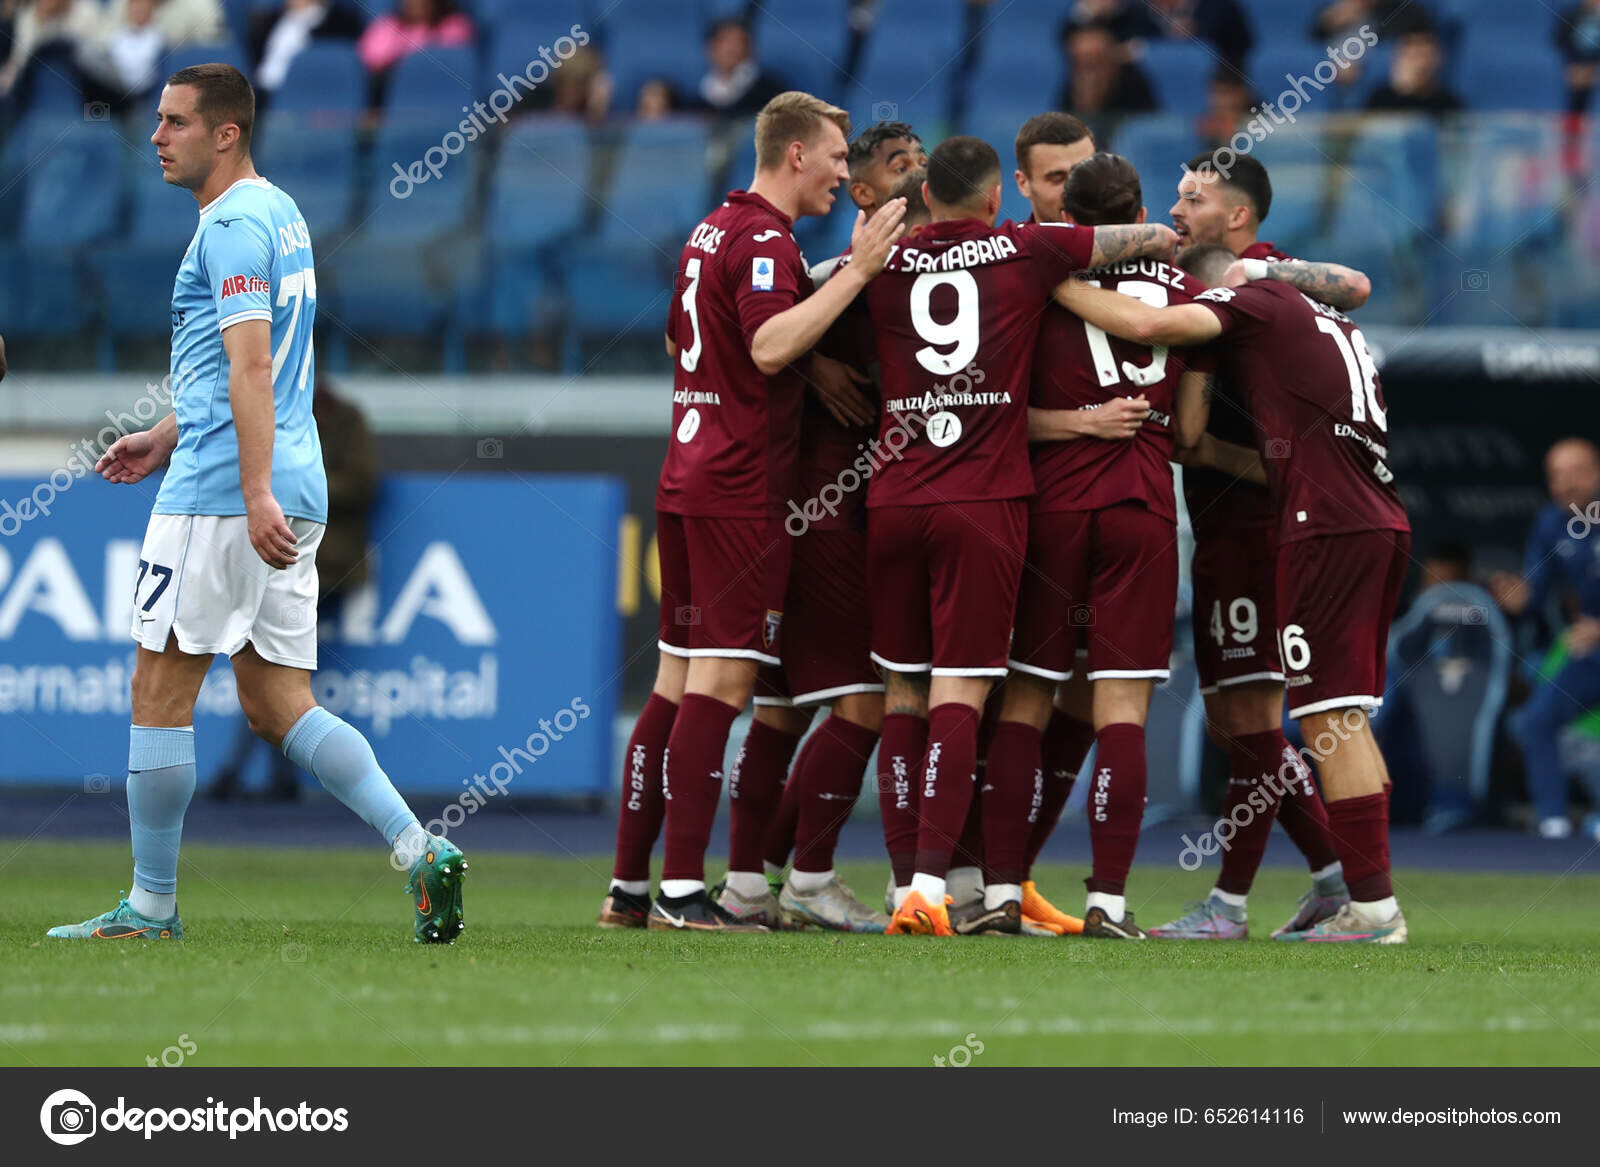 Ivan Ilic Torino Fc Celebrates Goal Editorial Stock Photo - Stock Image